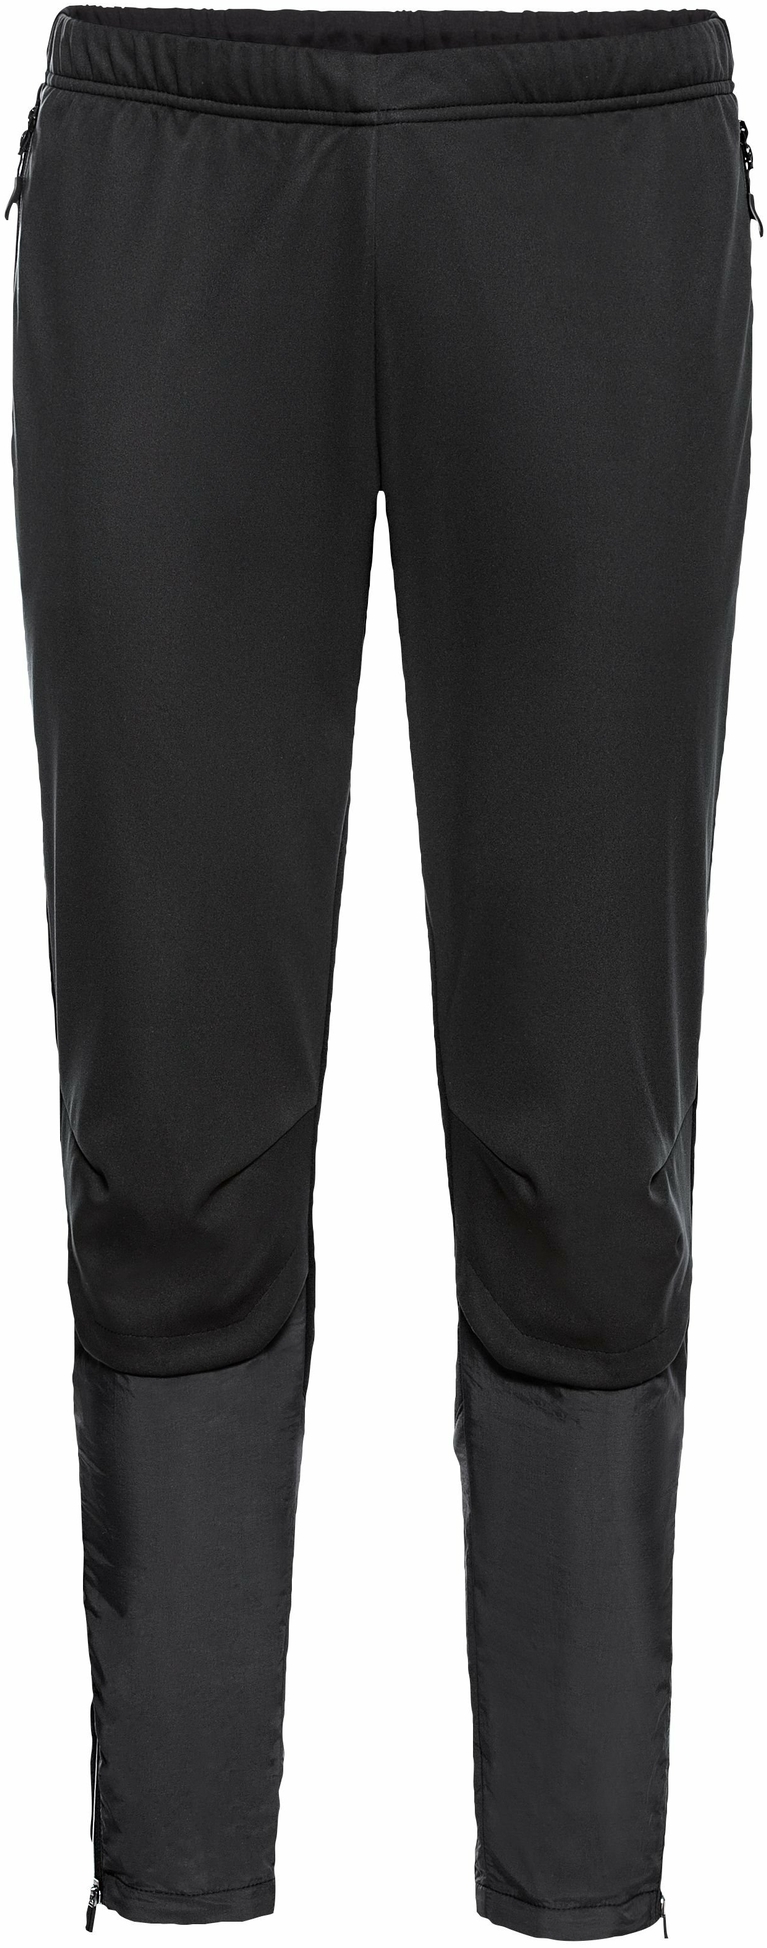 Bekleidung/Hosen: Apura  Damen Softshell Pants Hotoke XL Schwarz